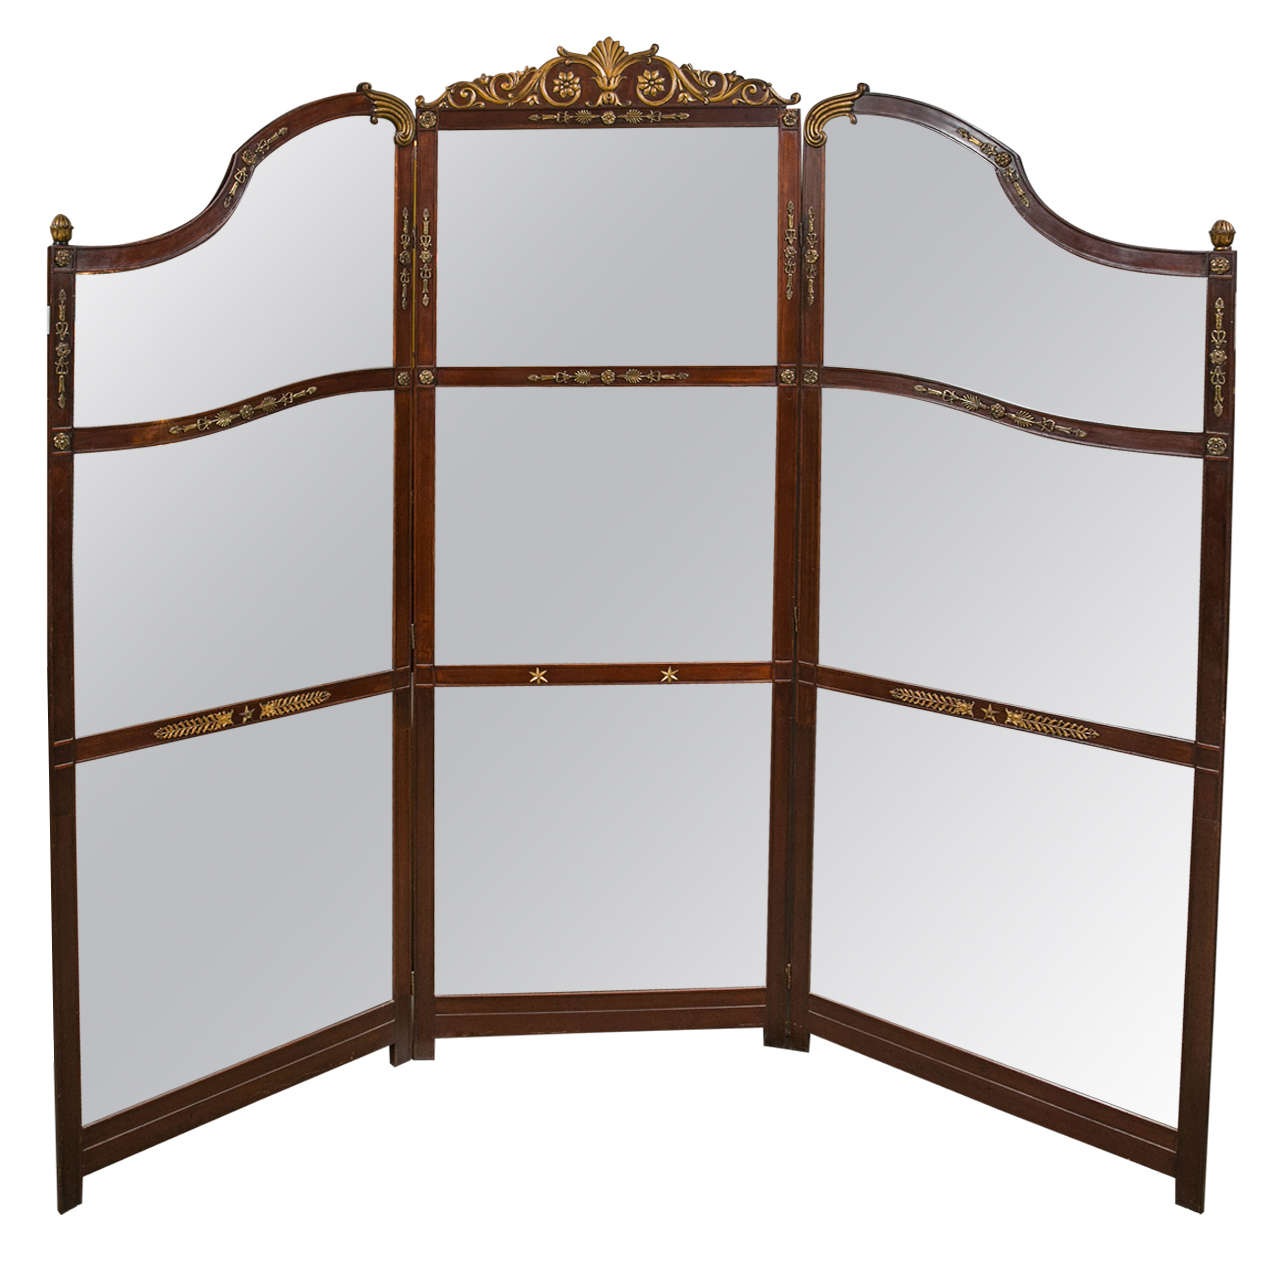 Three-Panel Room Divider or Screen Mirror and Mahogany, Early 19th Century